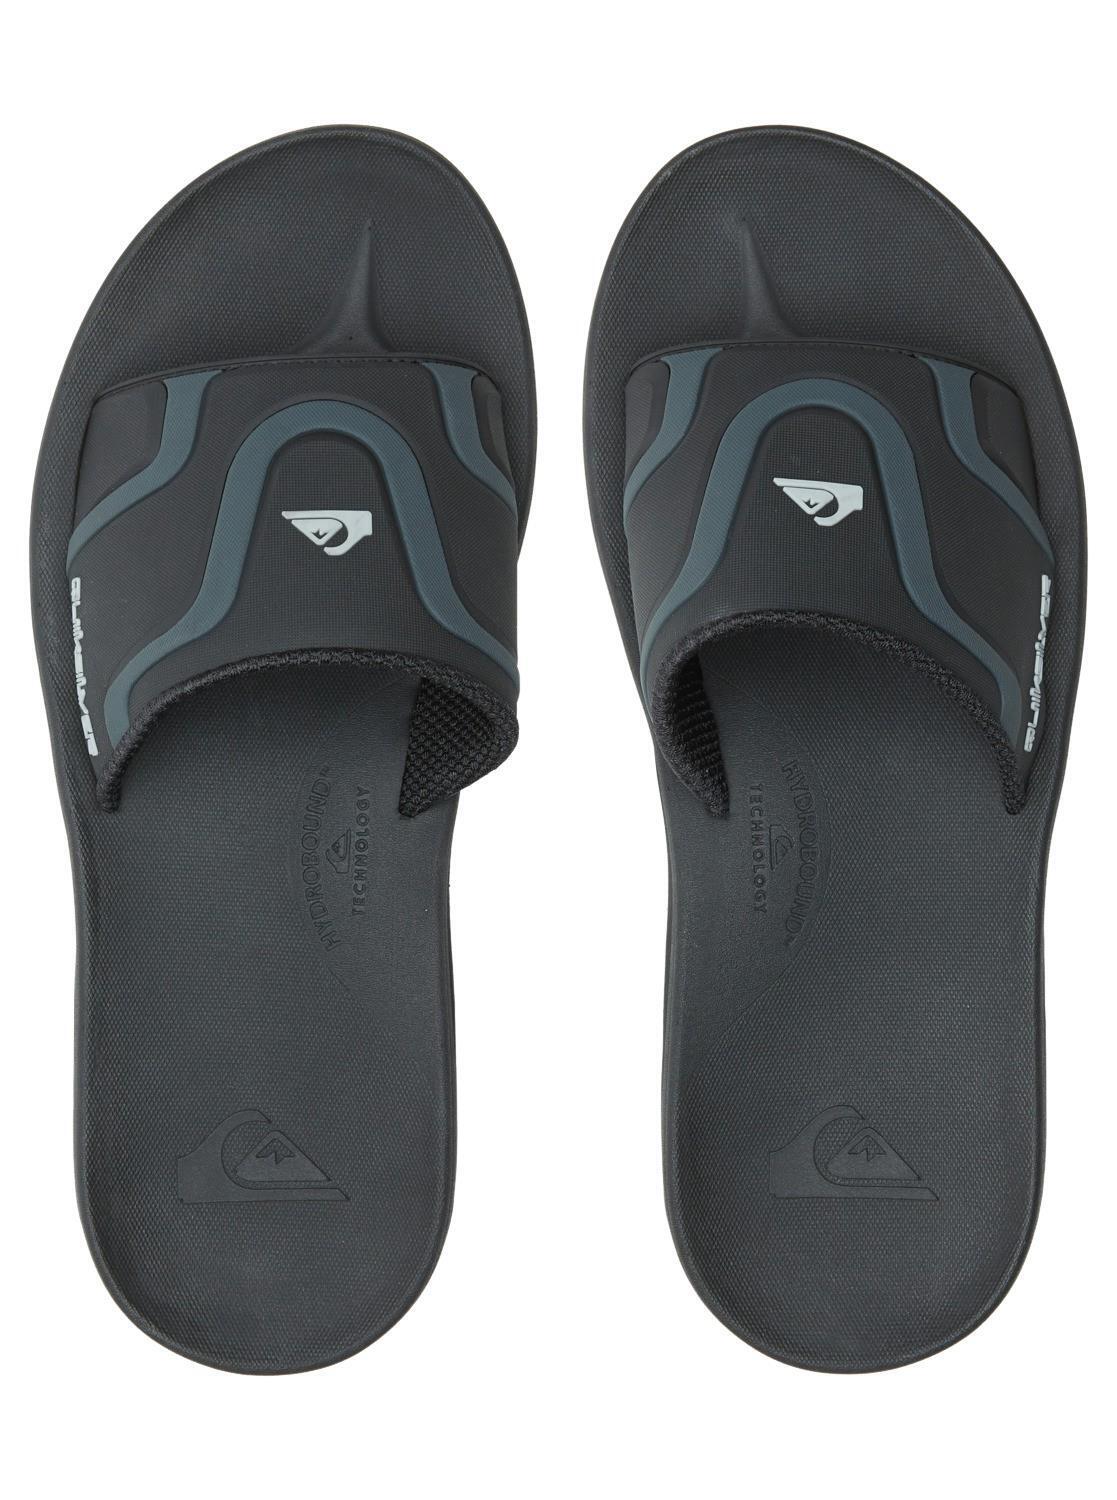 Quiksilver Mens Mathodic Recovery Black Slider Beach Sandals